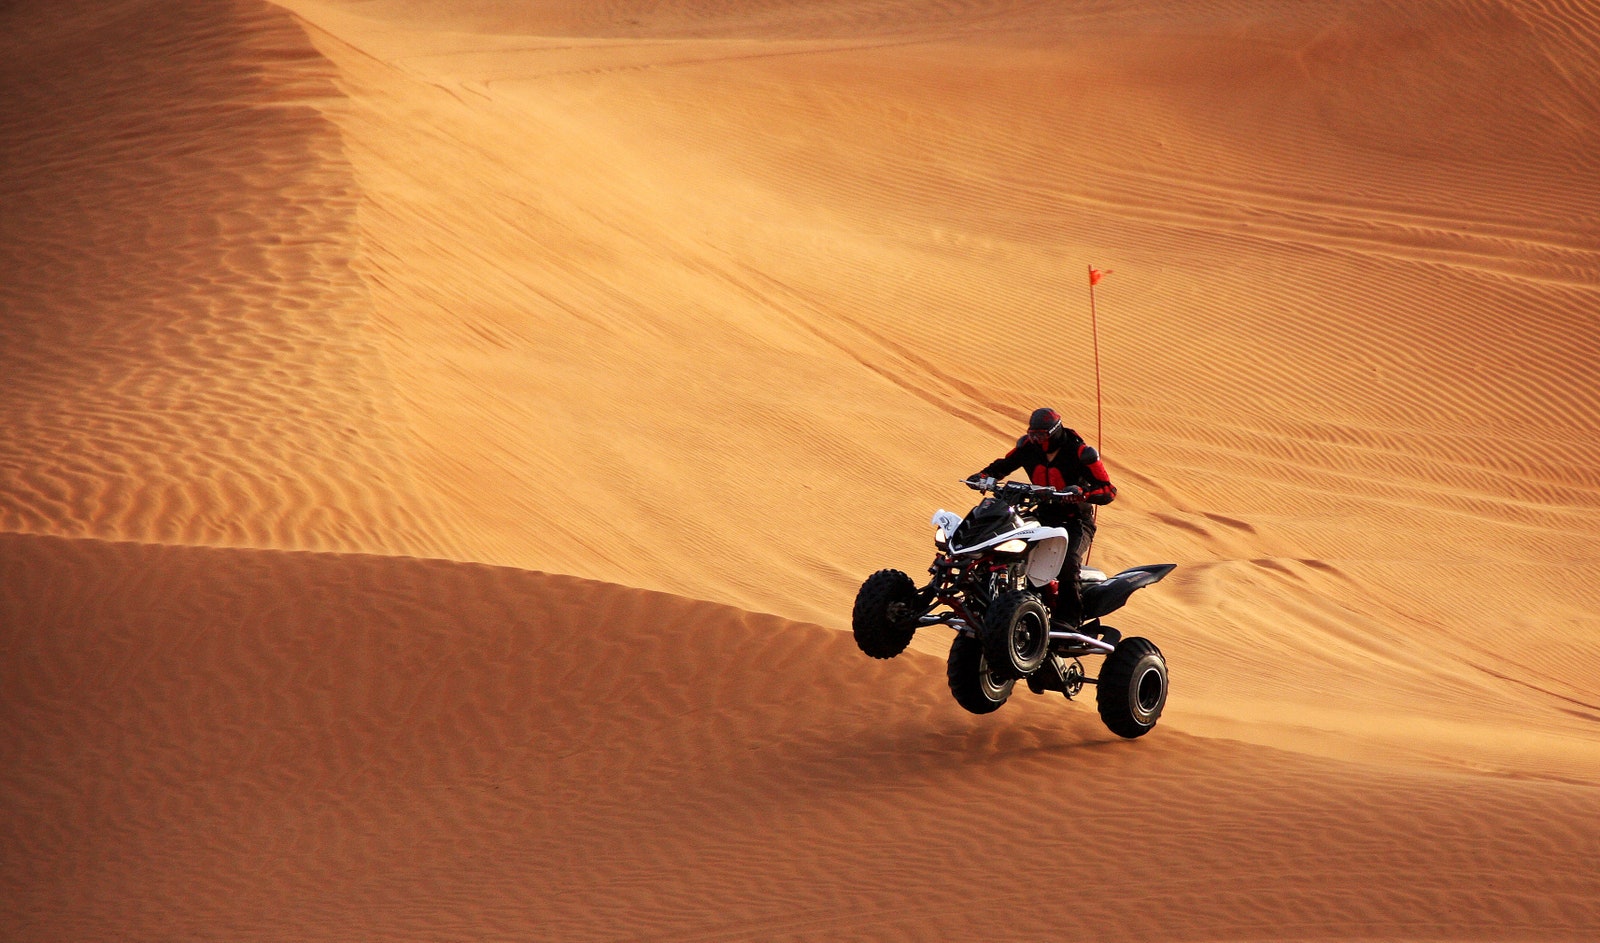 Man riding quad bike in desert Dubai.